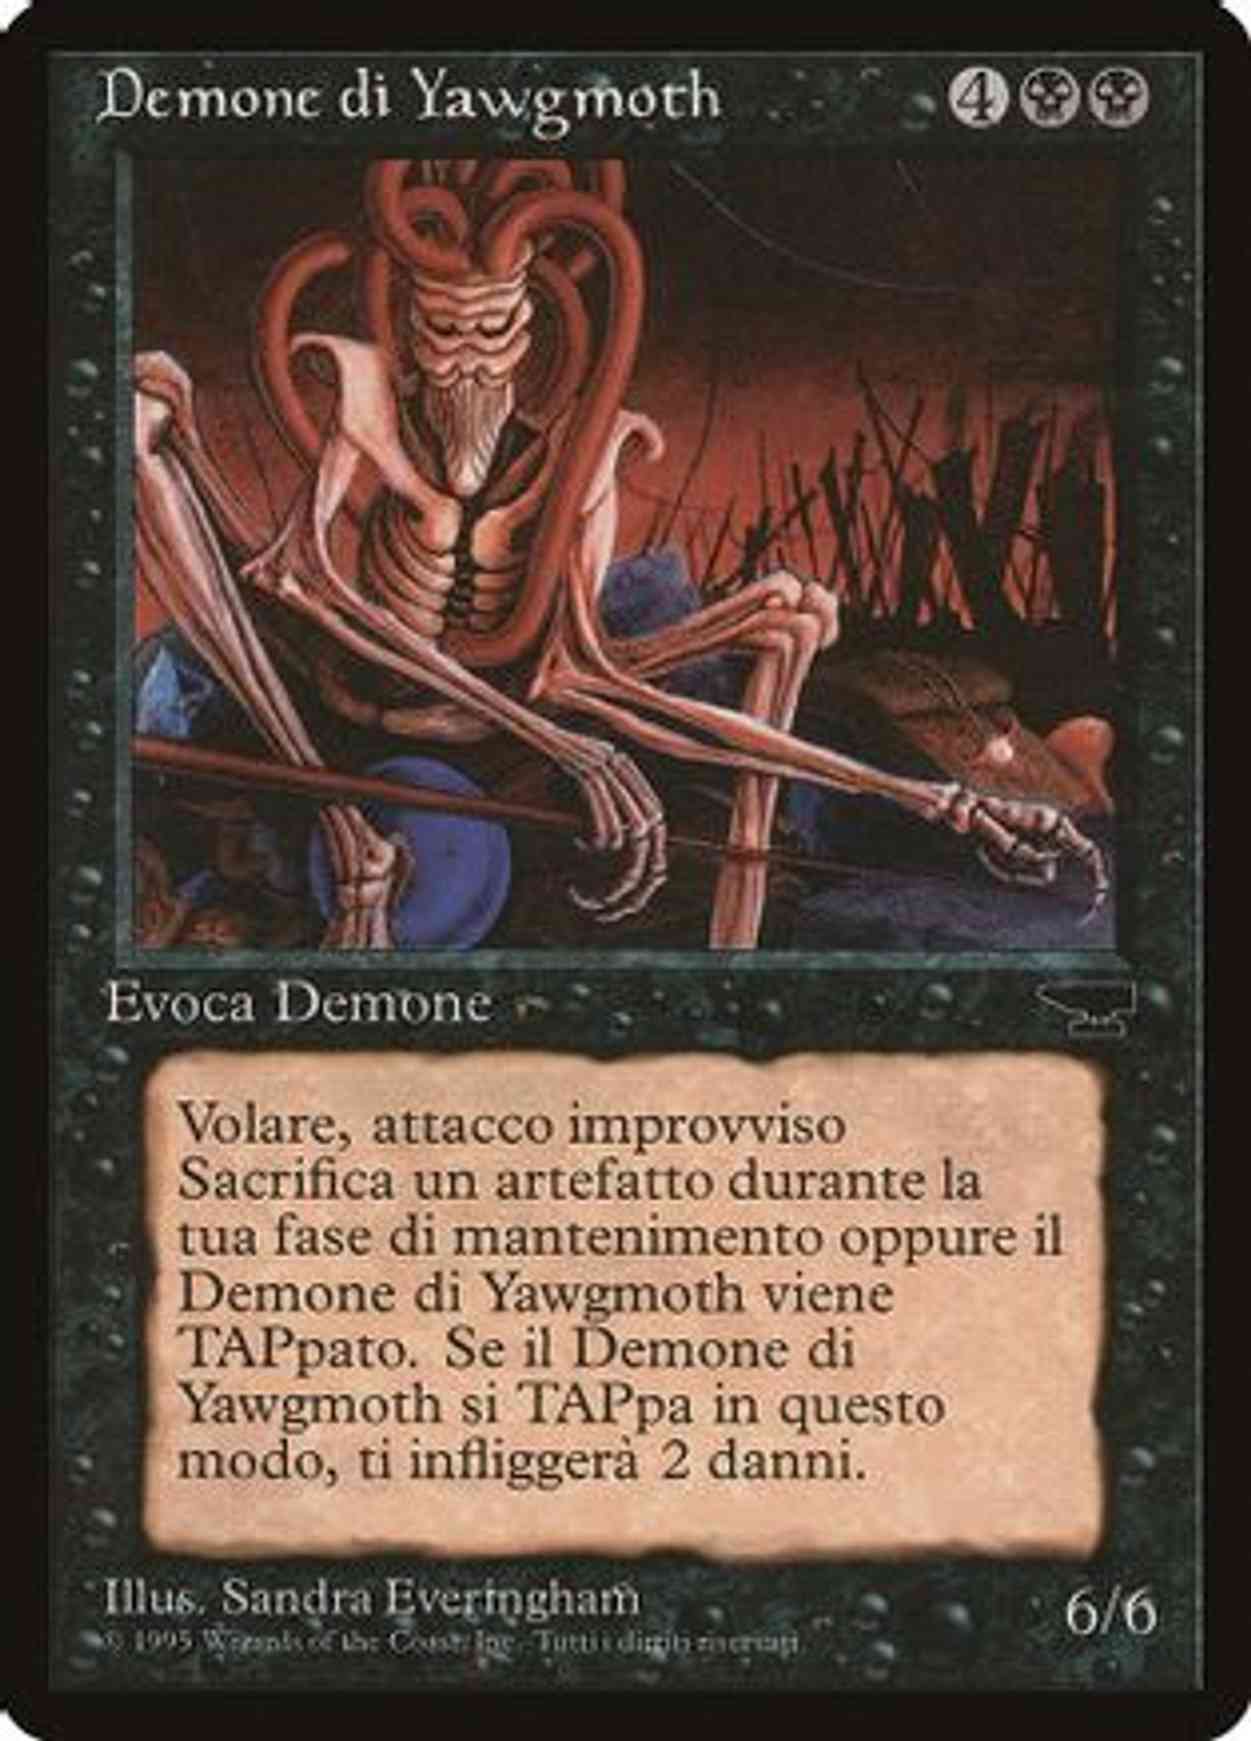 Yawgmoth Demon (Italian) - "Demone di Yawgmoth" magic card front